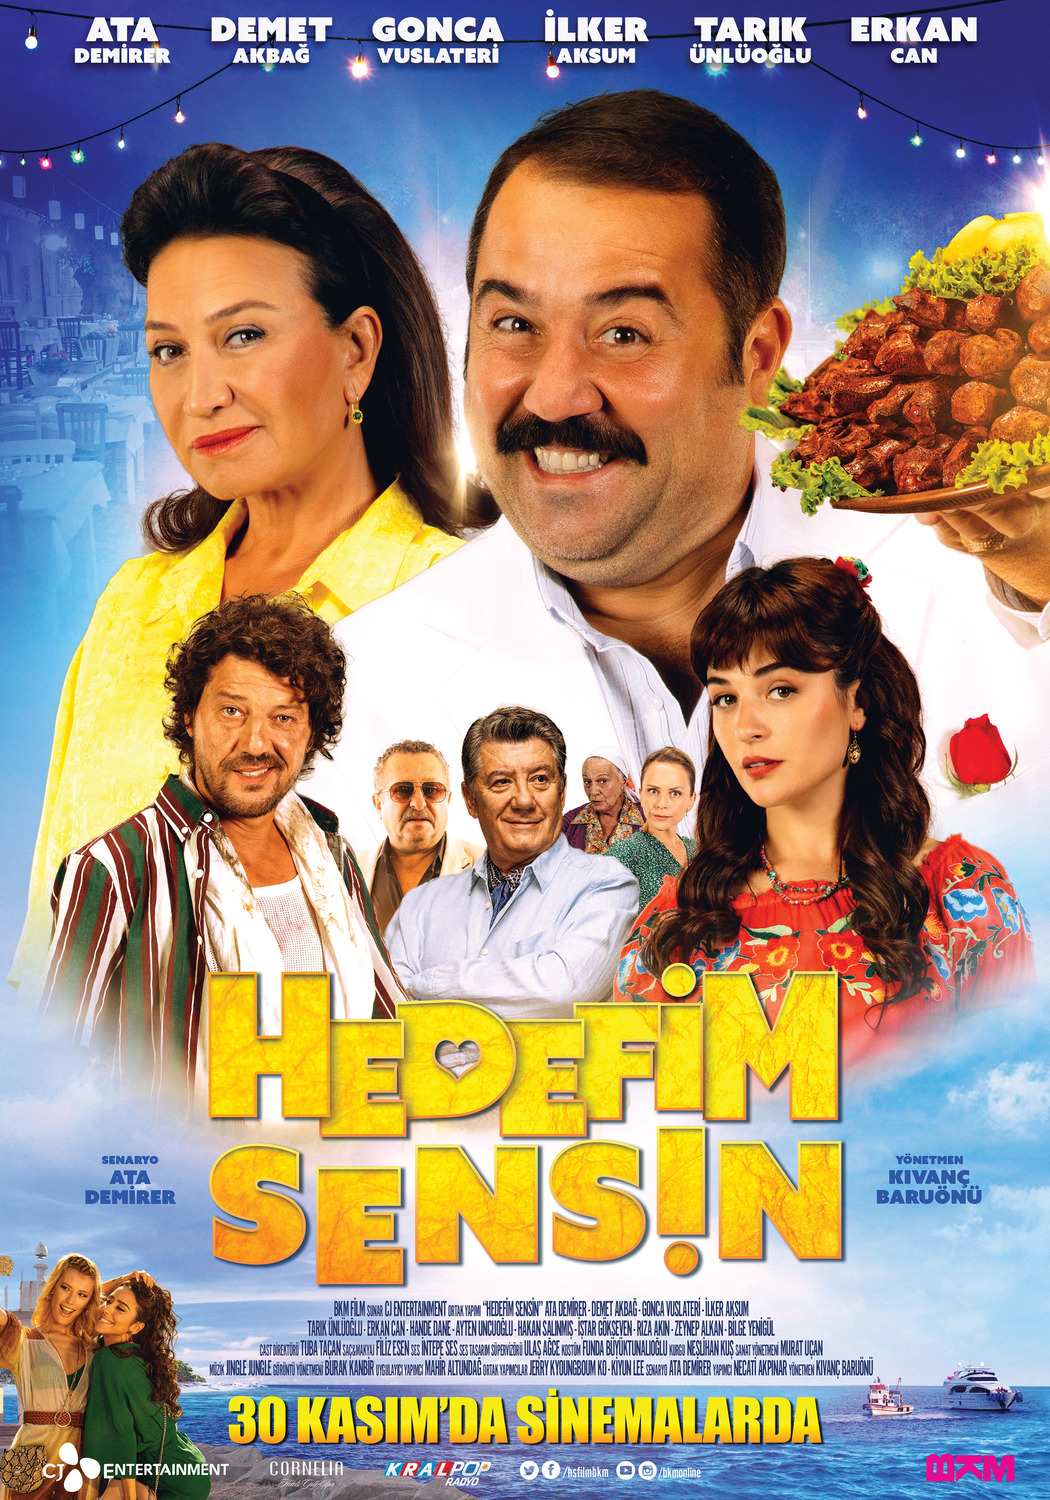 Extra Large Movie Poster Image for Hedefim Sensin 